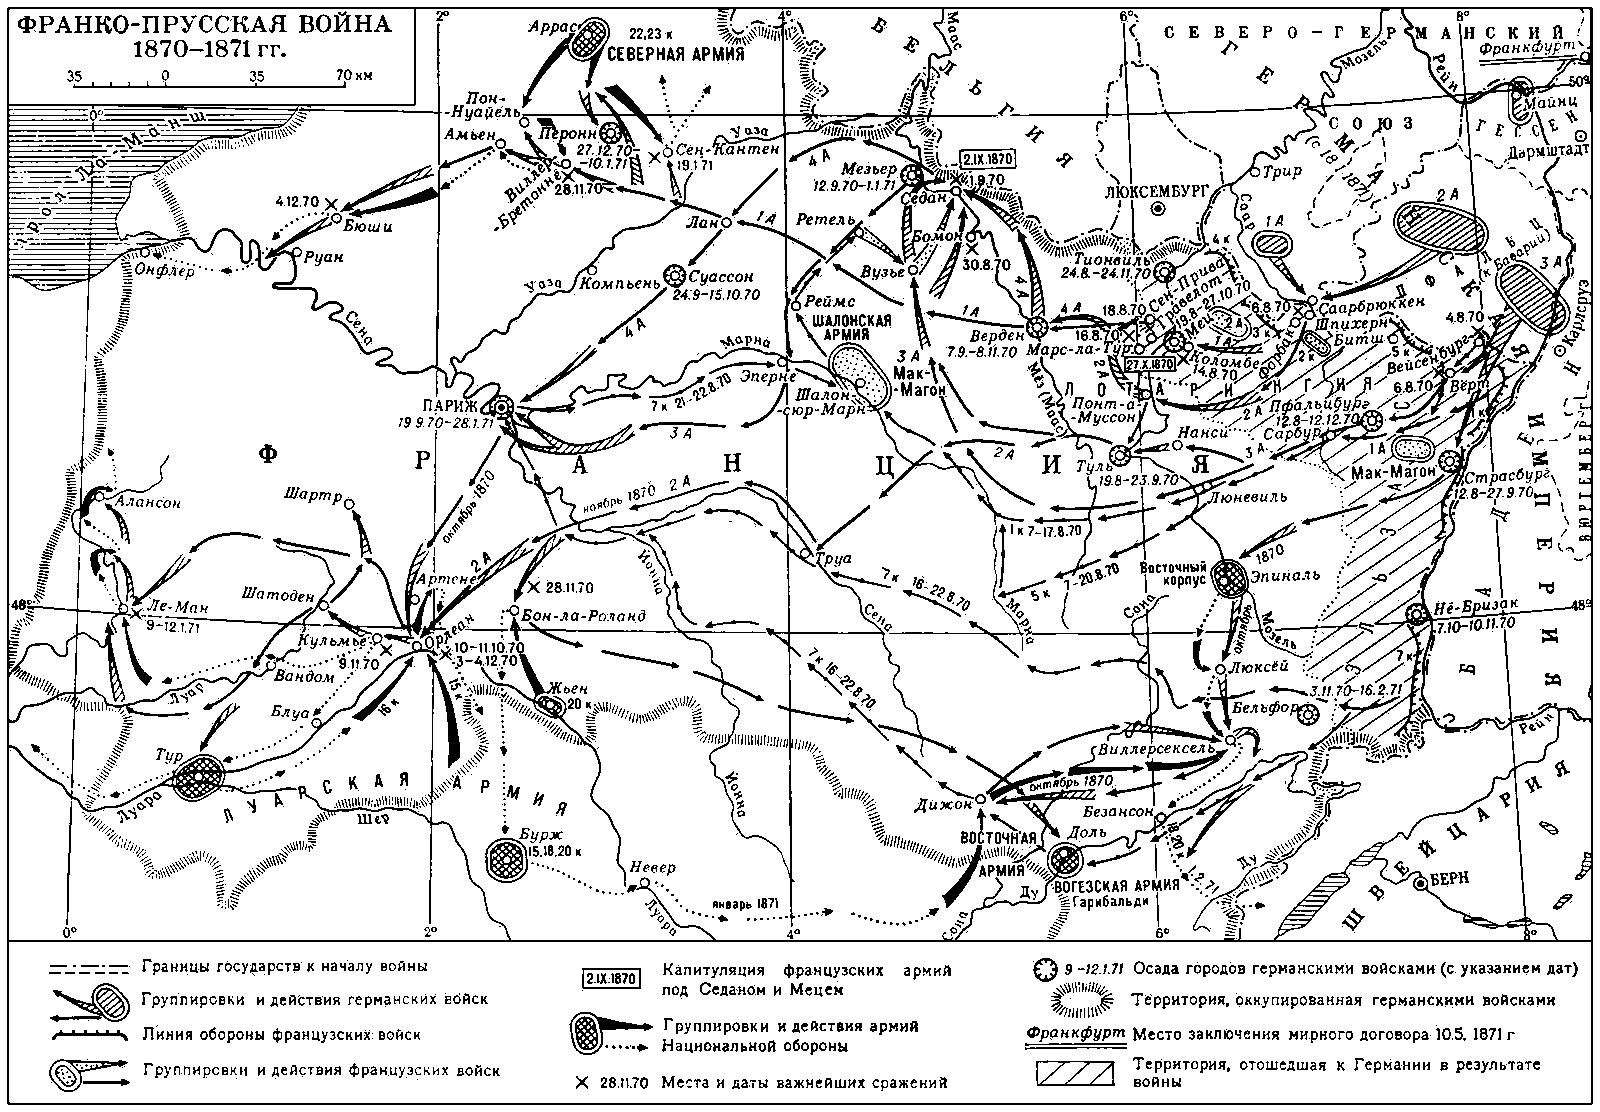 Франко-прусская война 1870-1871